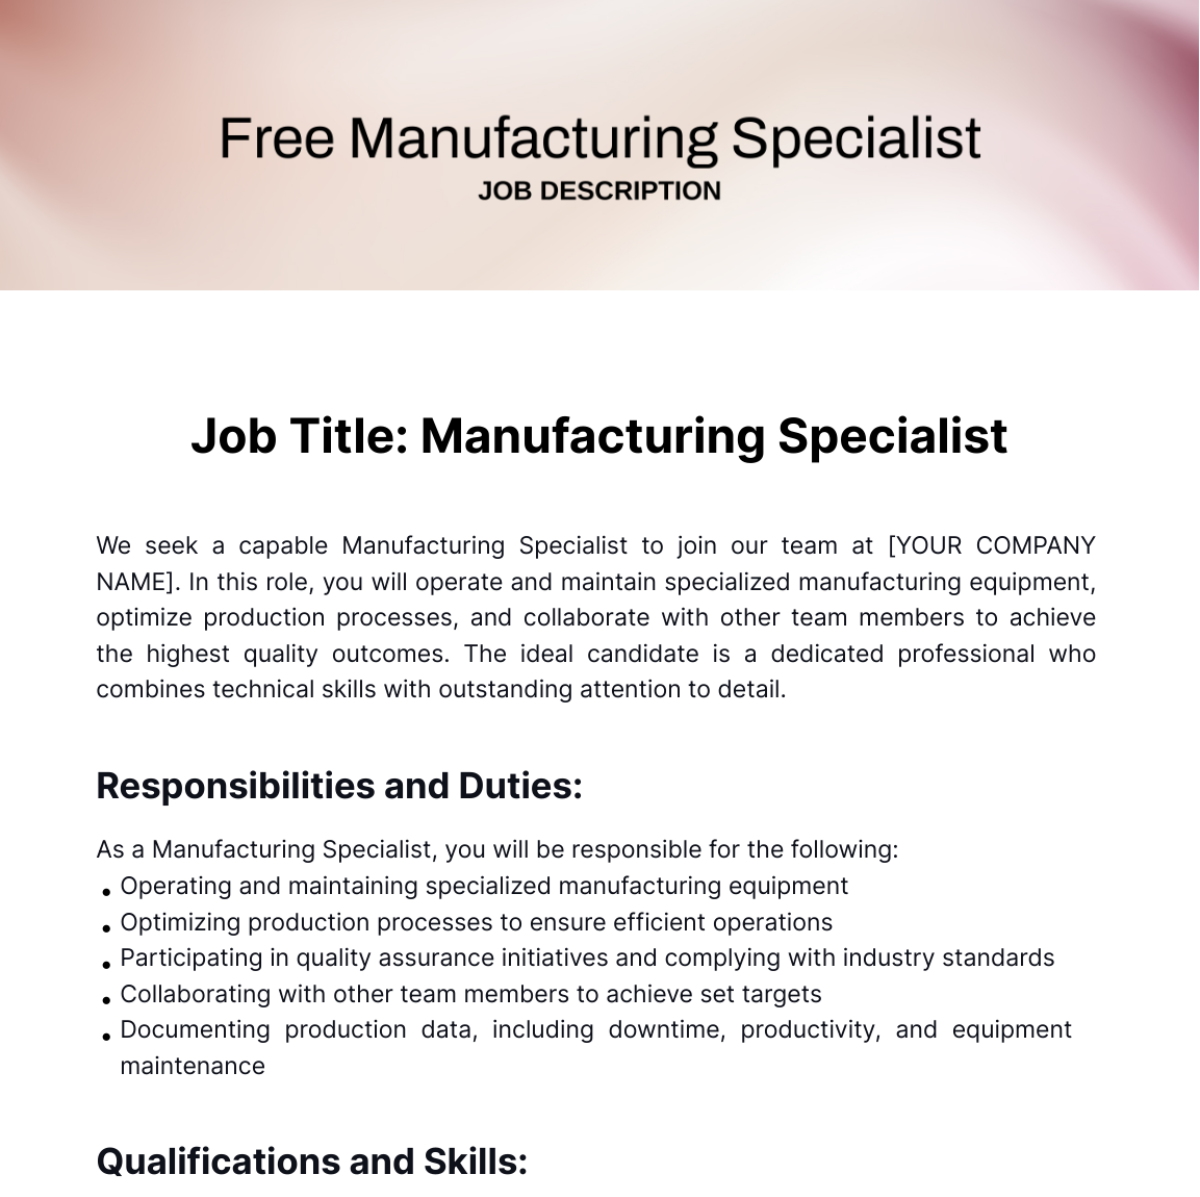 Free Manufacturing Specialist Job Description Template